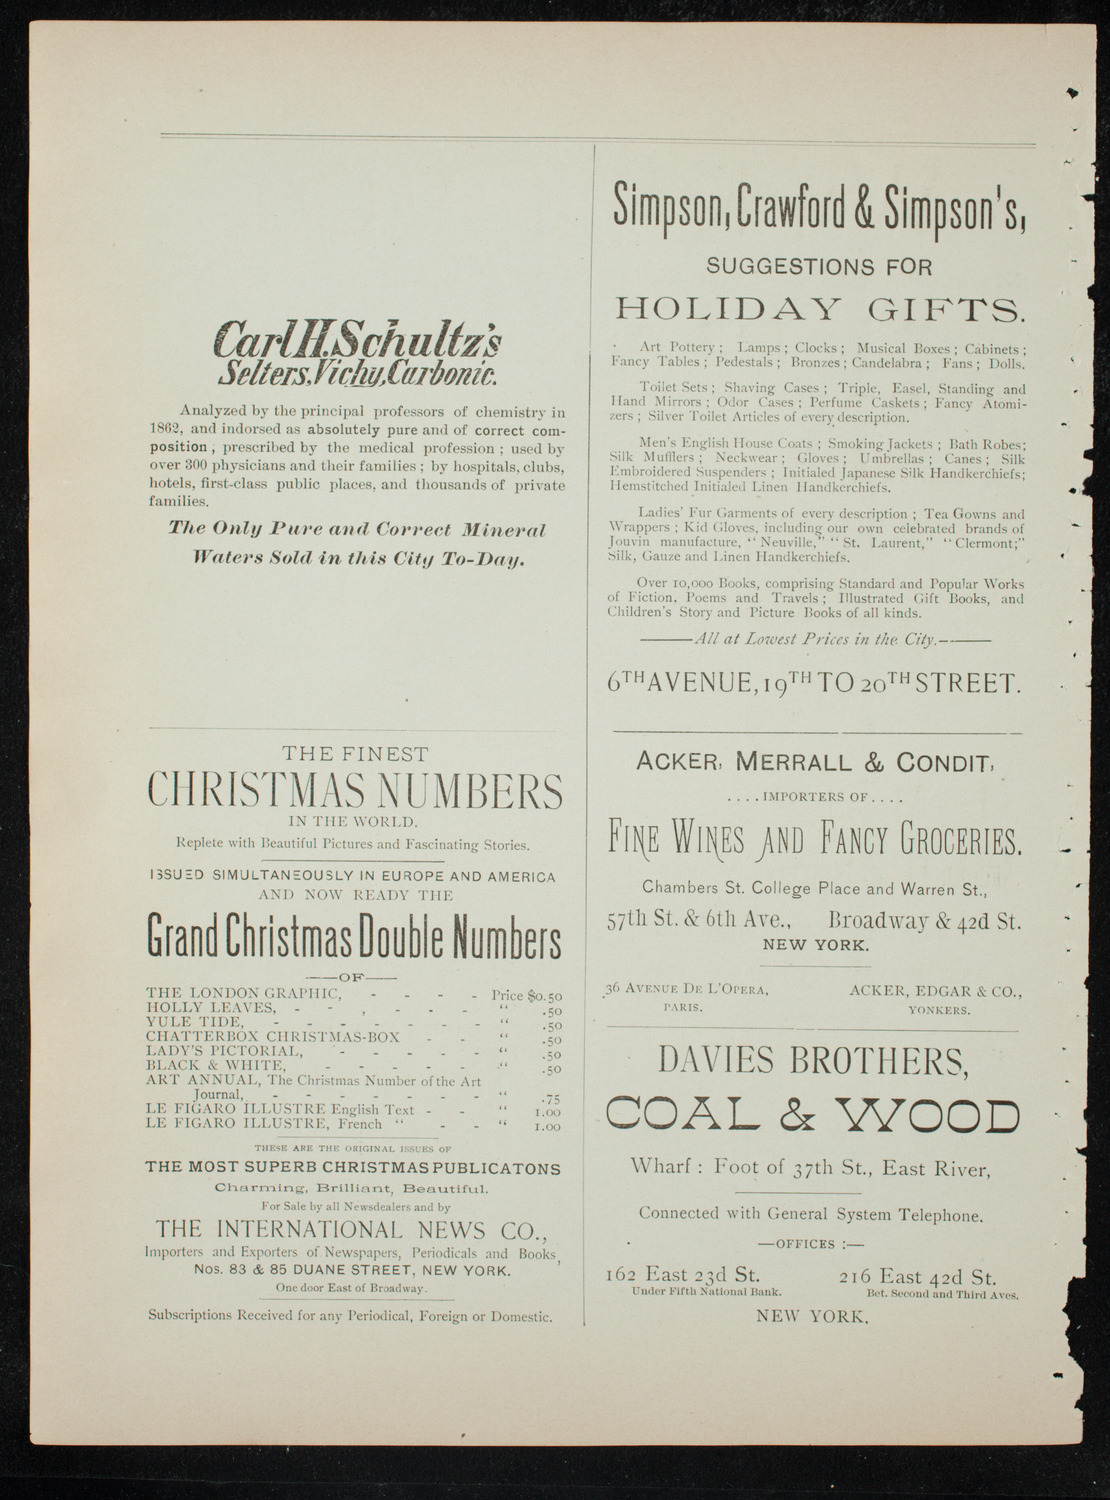 New York Athletic Club Amateur Minstrel Show, December 12, 1891, program page 2